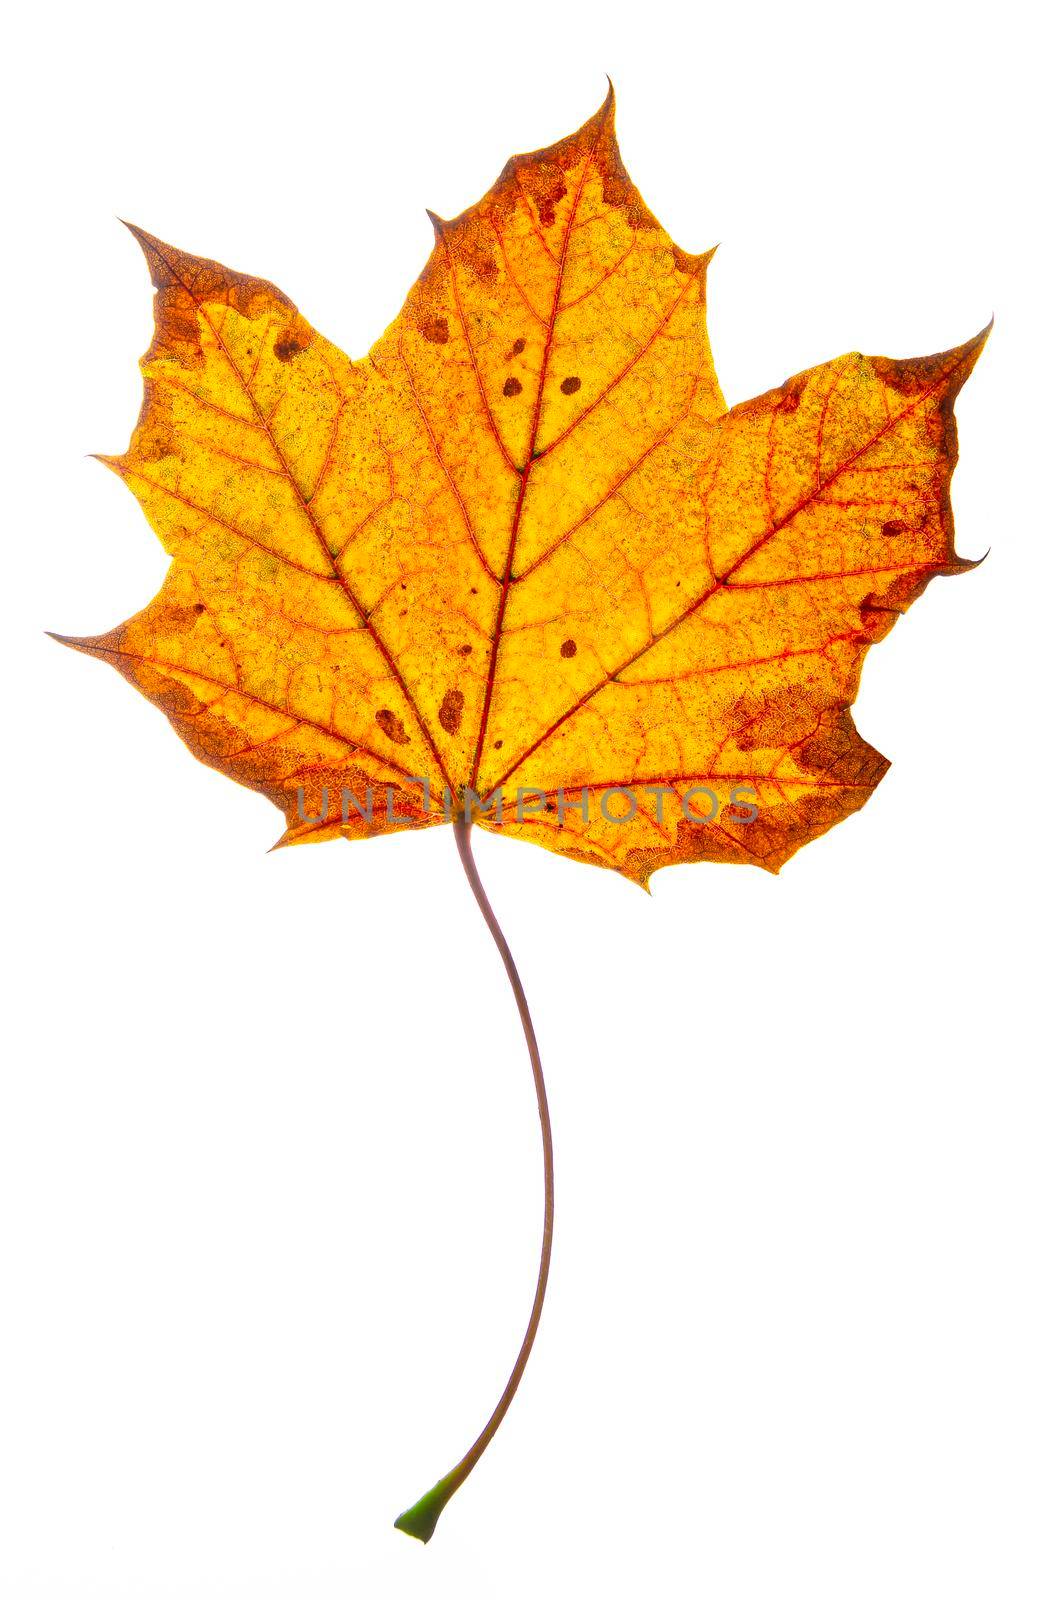 Brown and orange maple leaf by mypstudio